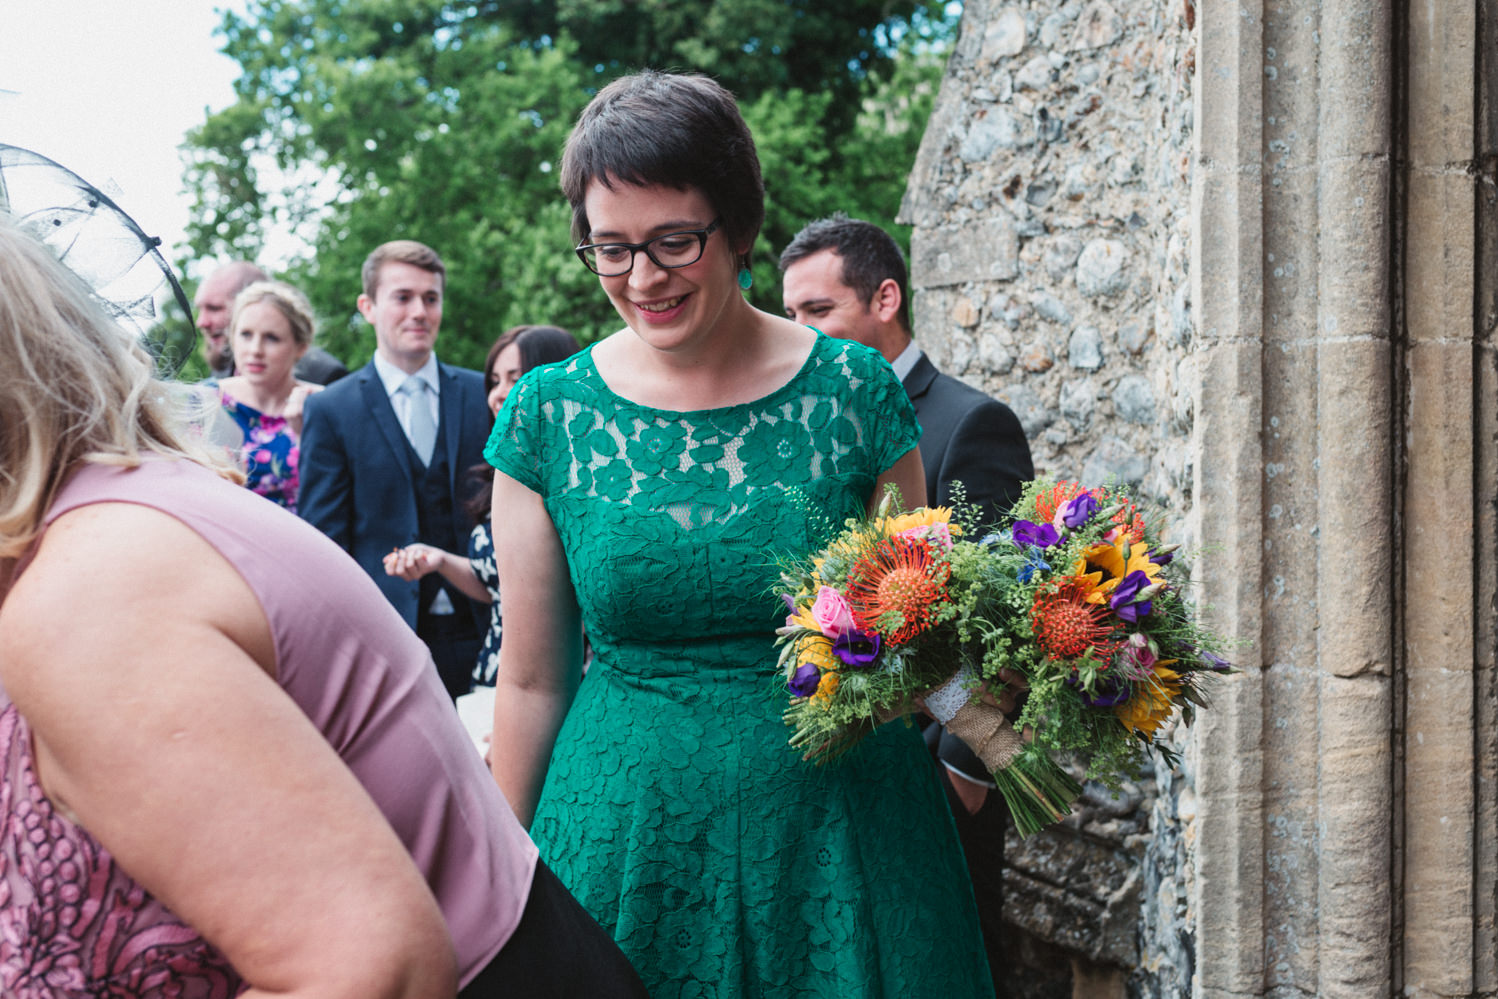 Bridesmaid in green dress after norfolk church wedding ceremony